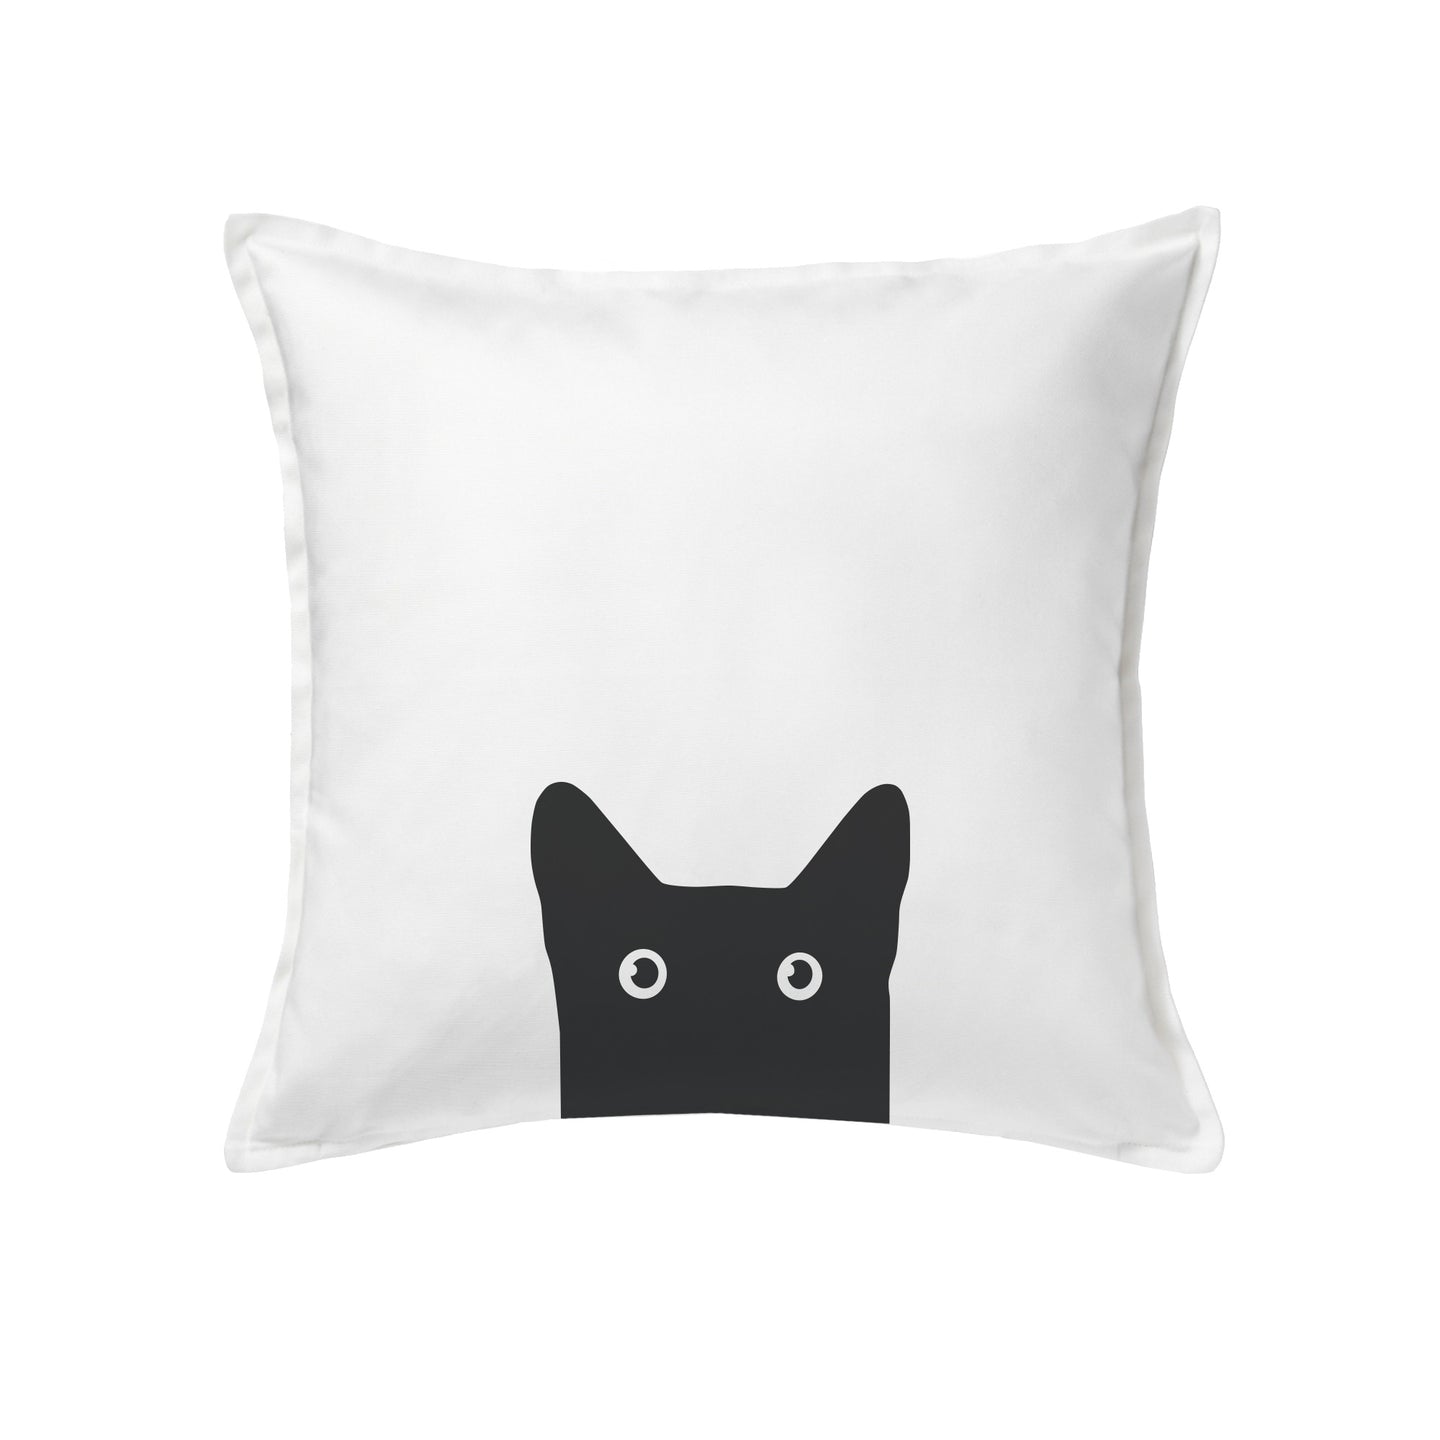 Black Cat cushion or cover 50x50cm (20x20